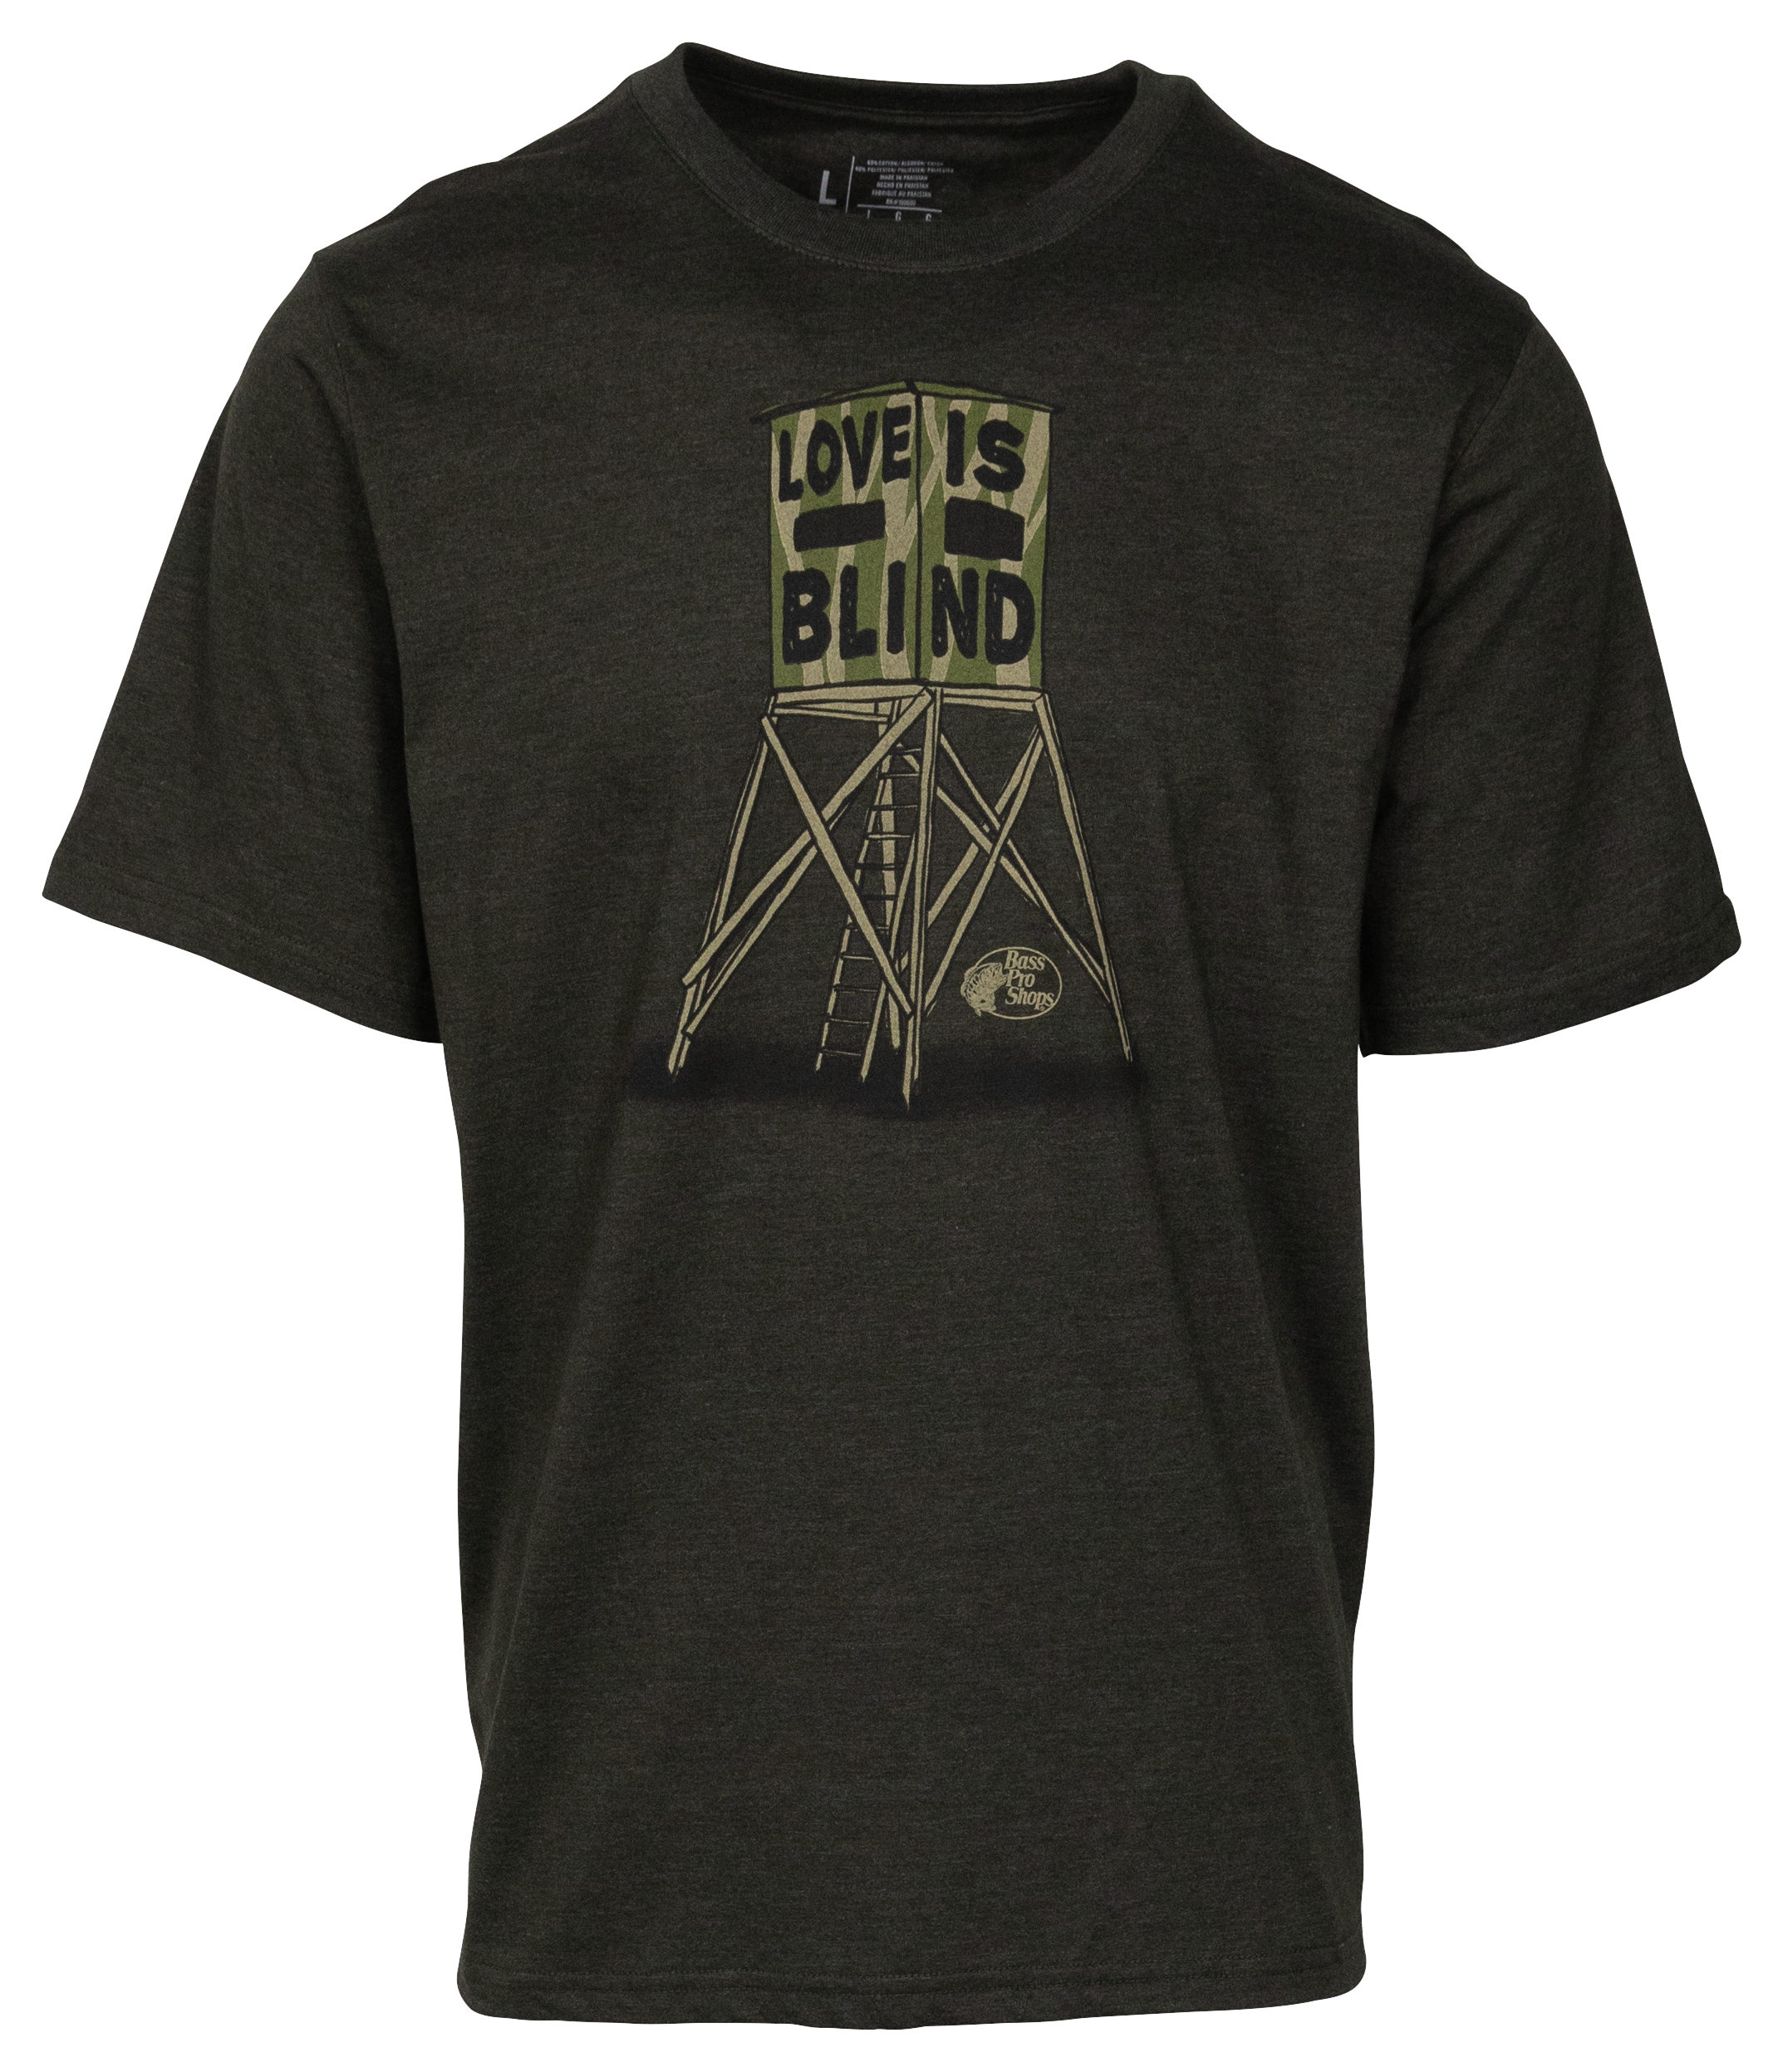 Bass Pro Shops Love Is Blind Short-Sleeve T-Shirt for Men - Olive Heather - L